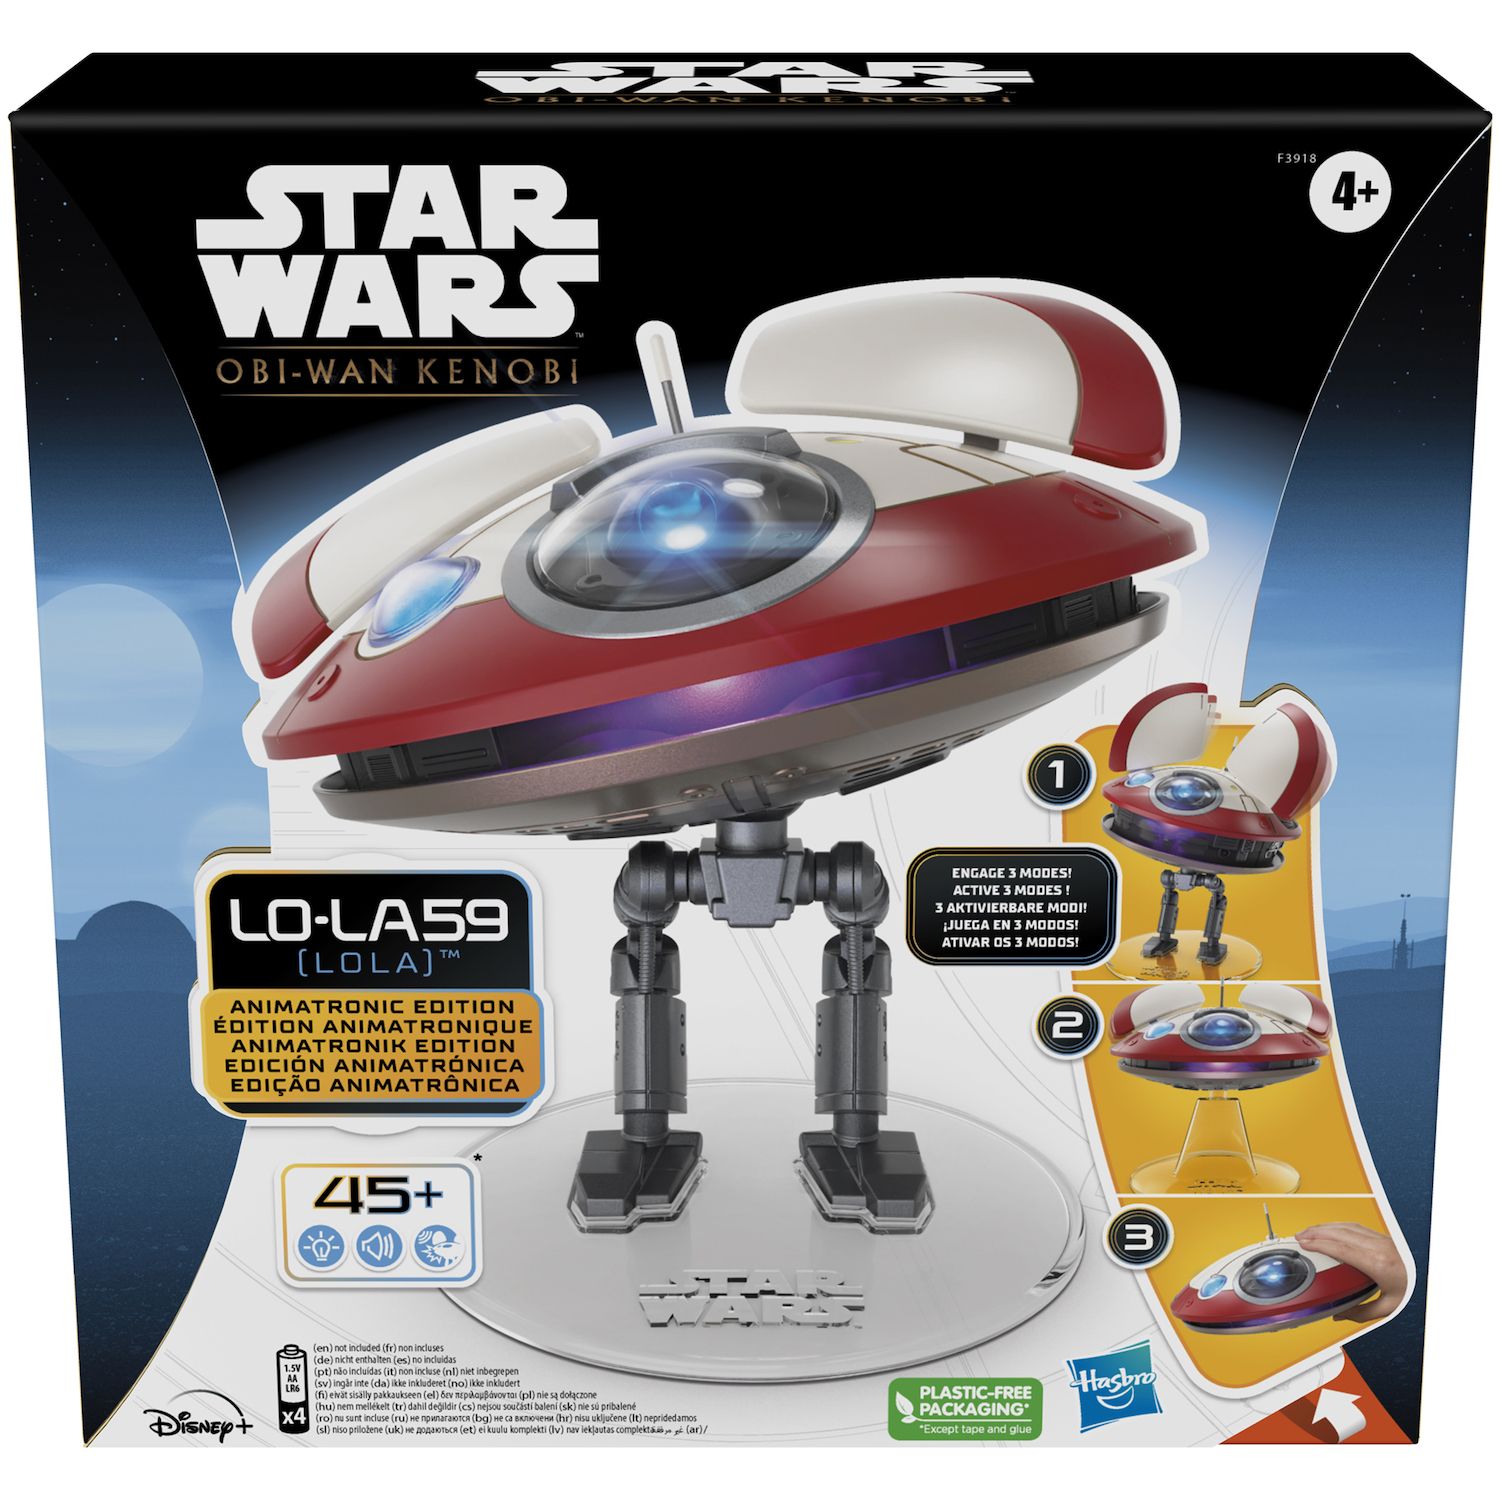 Star Wars L0-LA59 (Lola) Animatronic Edition Droid Toy $31.49 + Free Shipping $49+